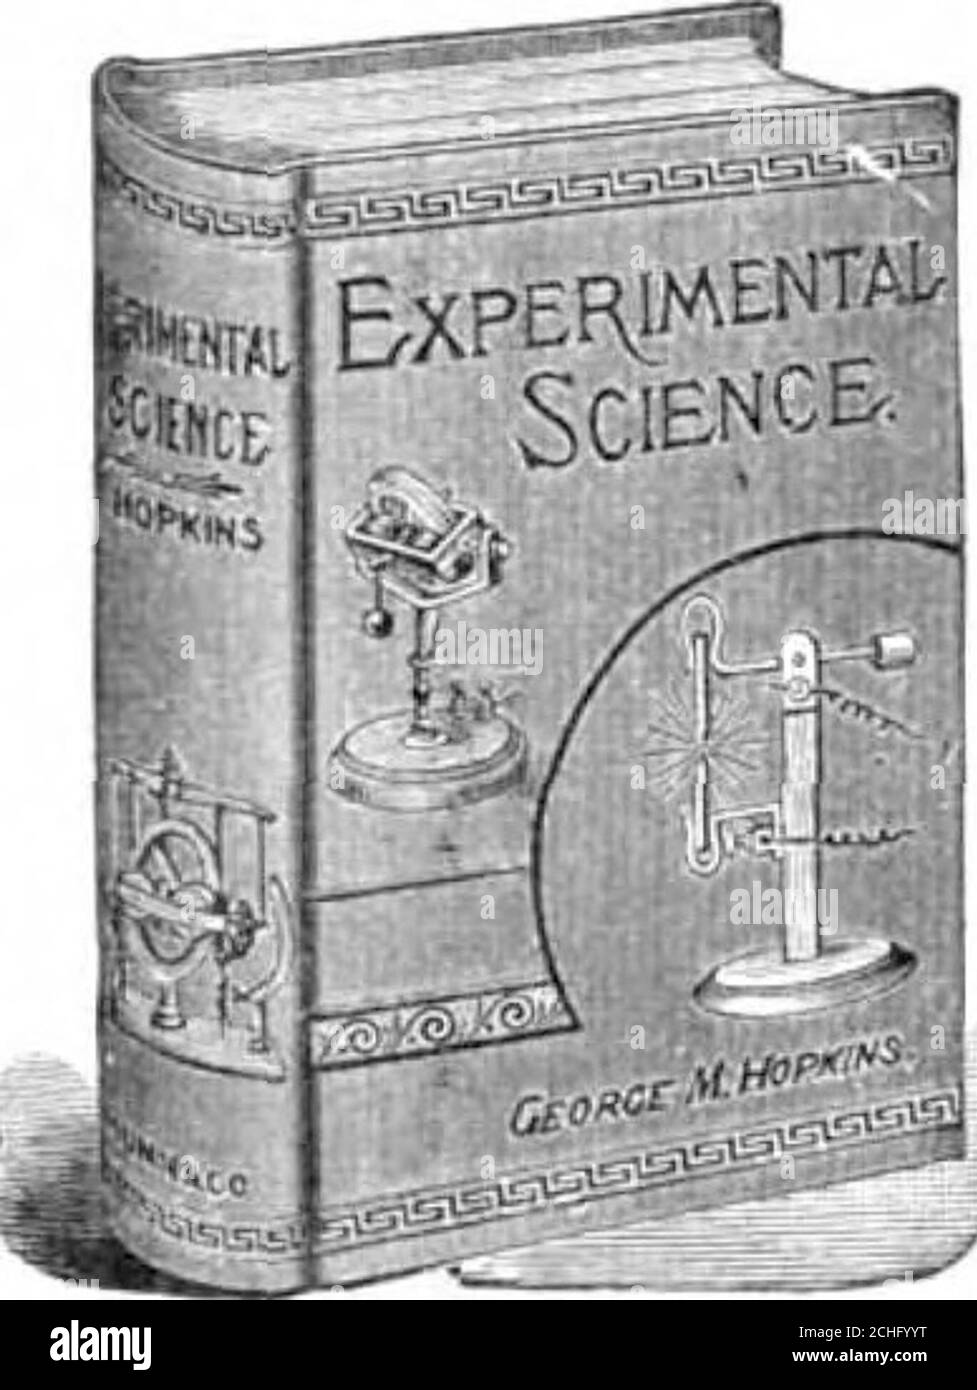 . Scientific American Volume 84 Number 05 (February 1901) . H901 SCIENTIFIC AMERICAN, INC. February 2, 1901. Sftuntiiit %mmtm. 79. Stock Photo